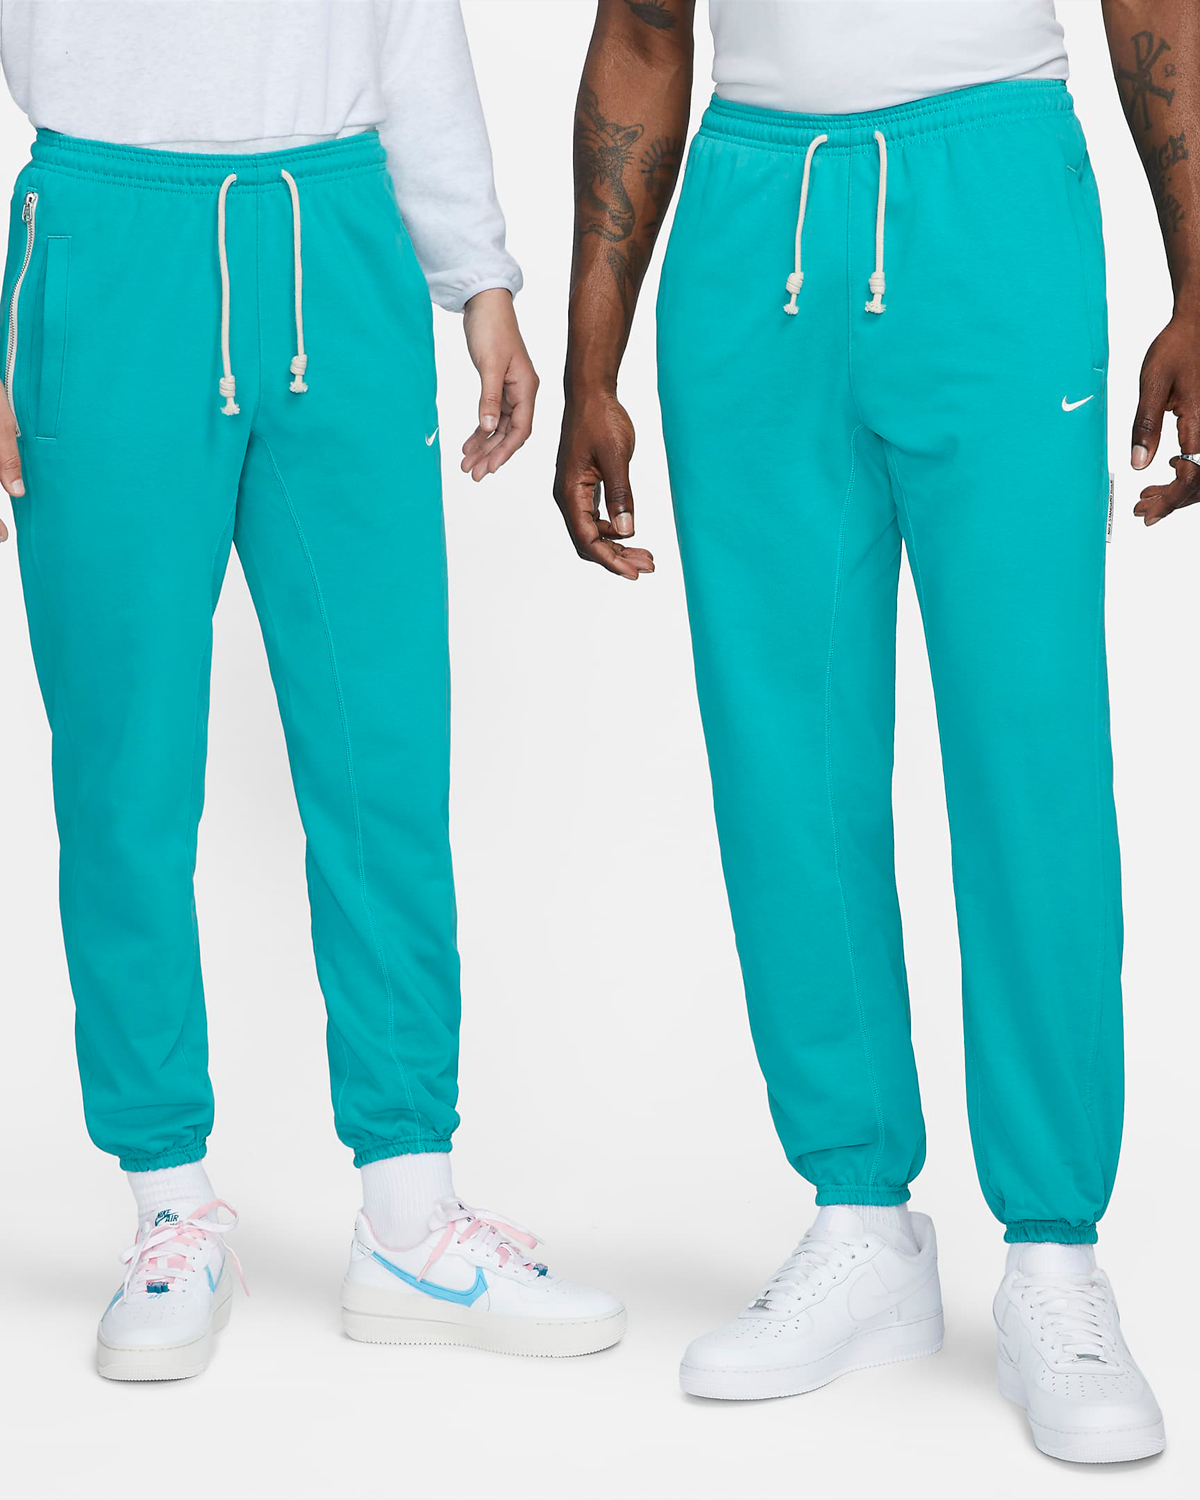 Nike-Standard-Issue-Pants-Teal-Nebula